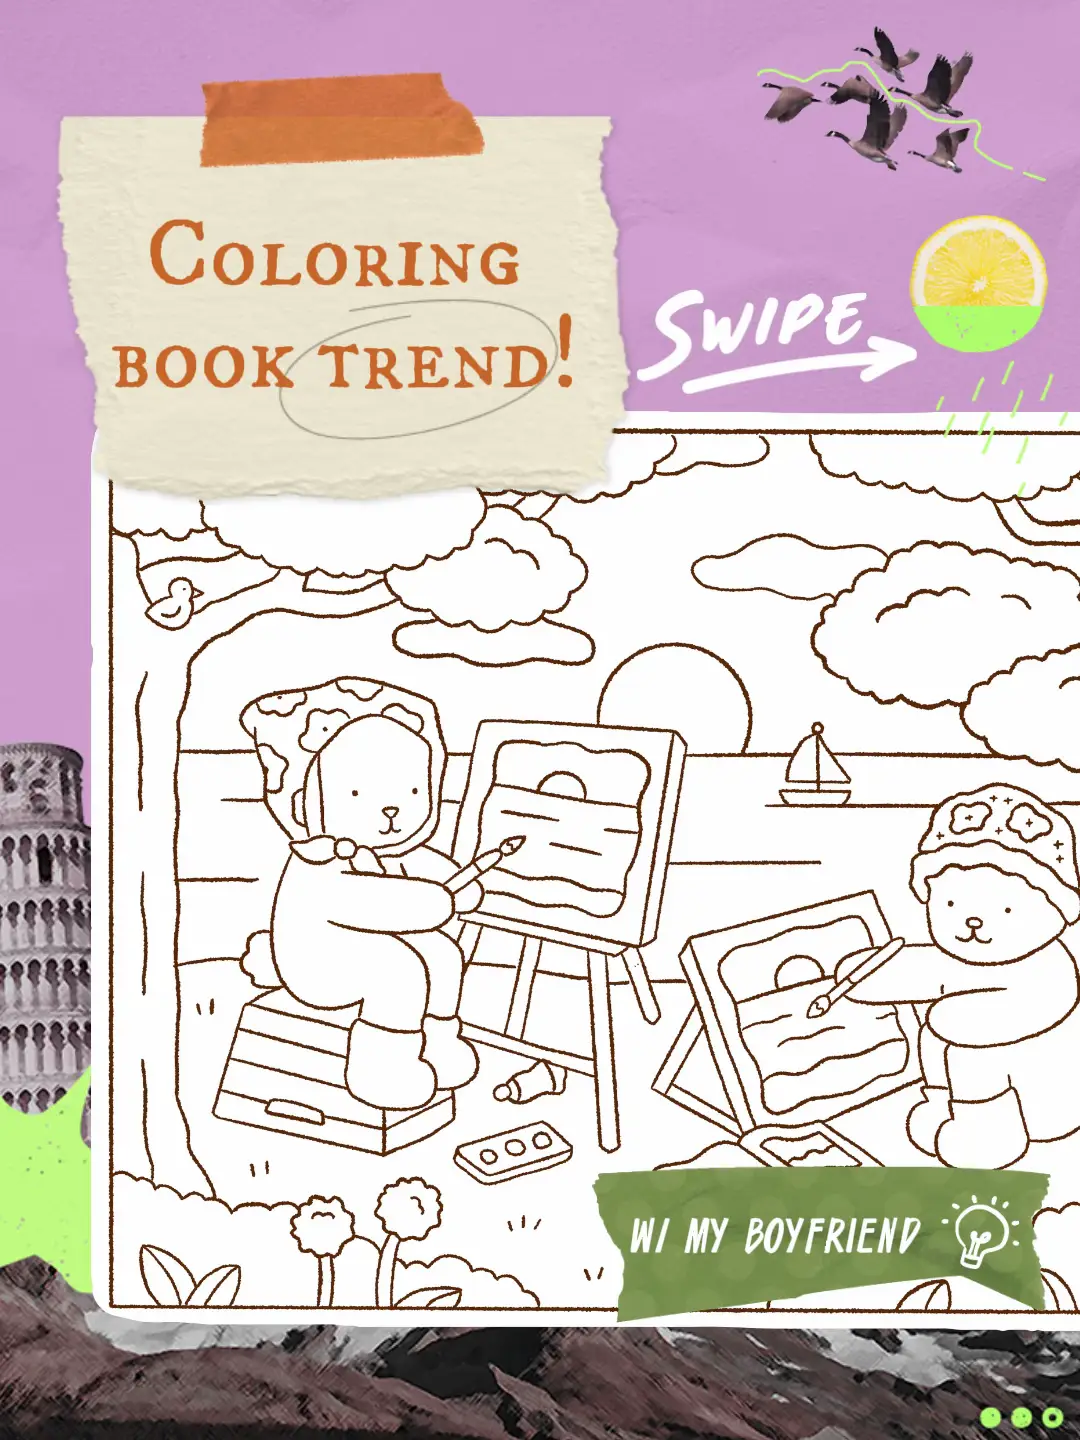 I love this trend 😭 #bobbiegoodscoloringbook #coloring #trend